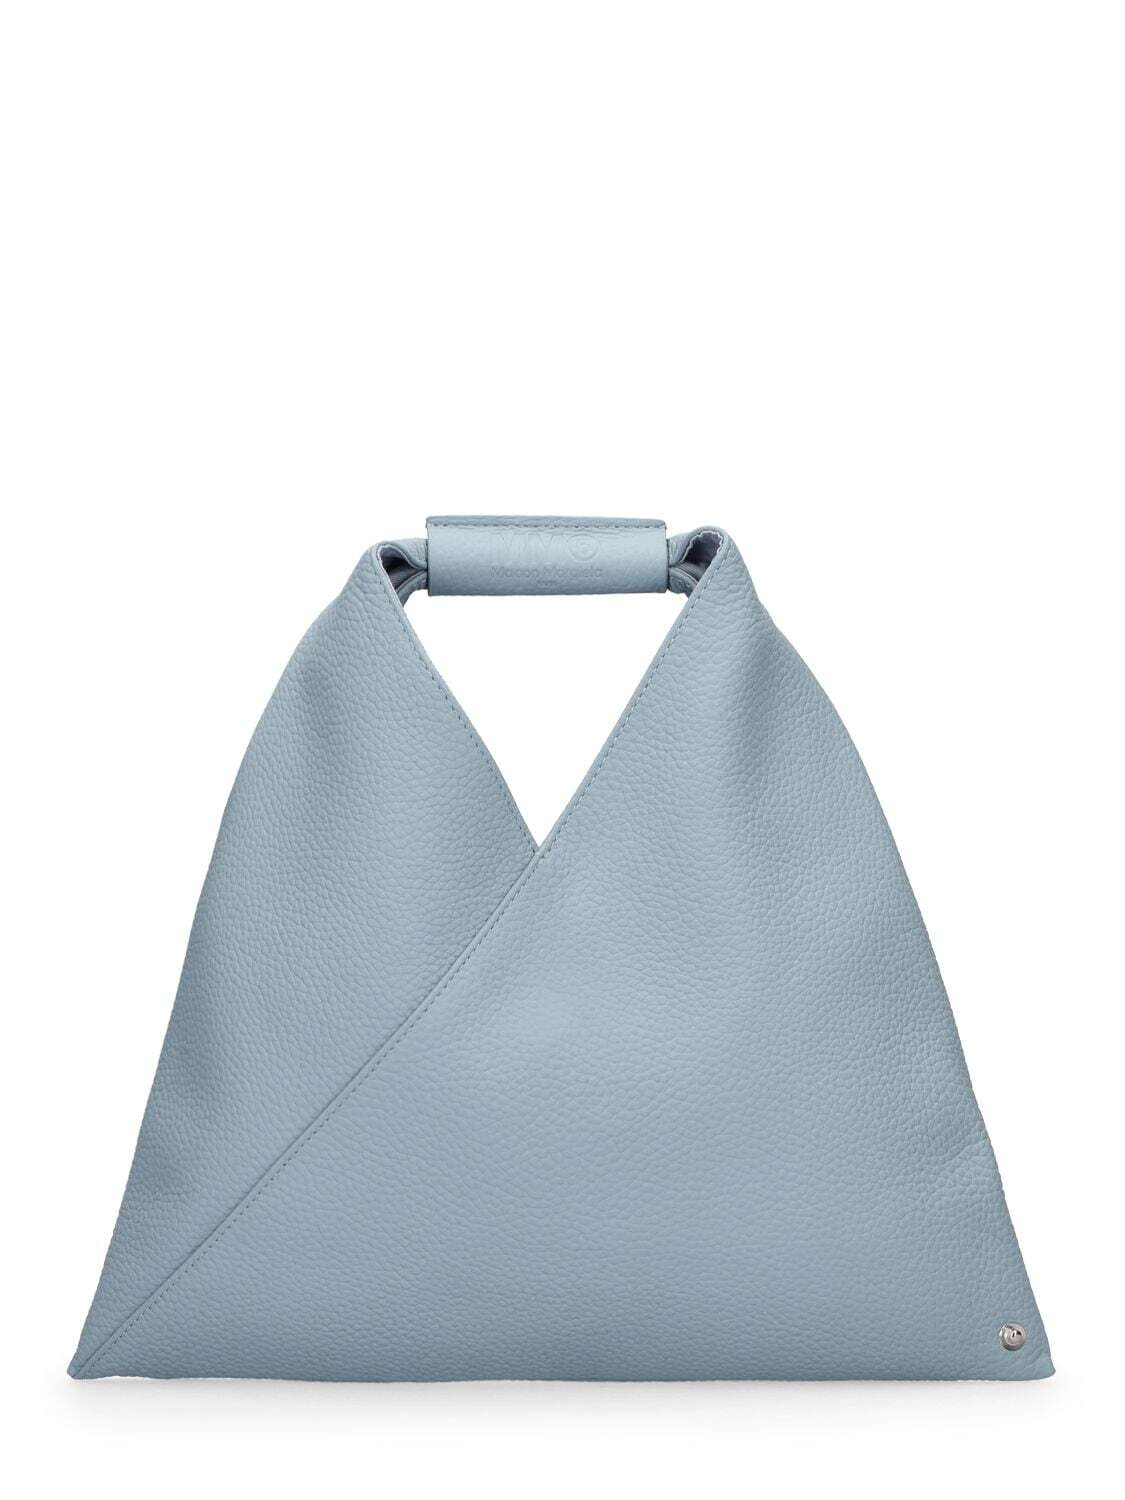 MM6 MAISON MARGIELA Mini Japanese Grained Leather Bag in blue